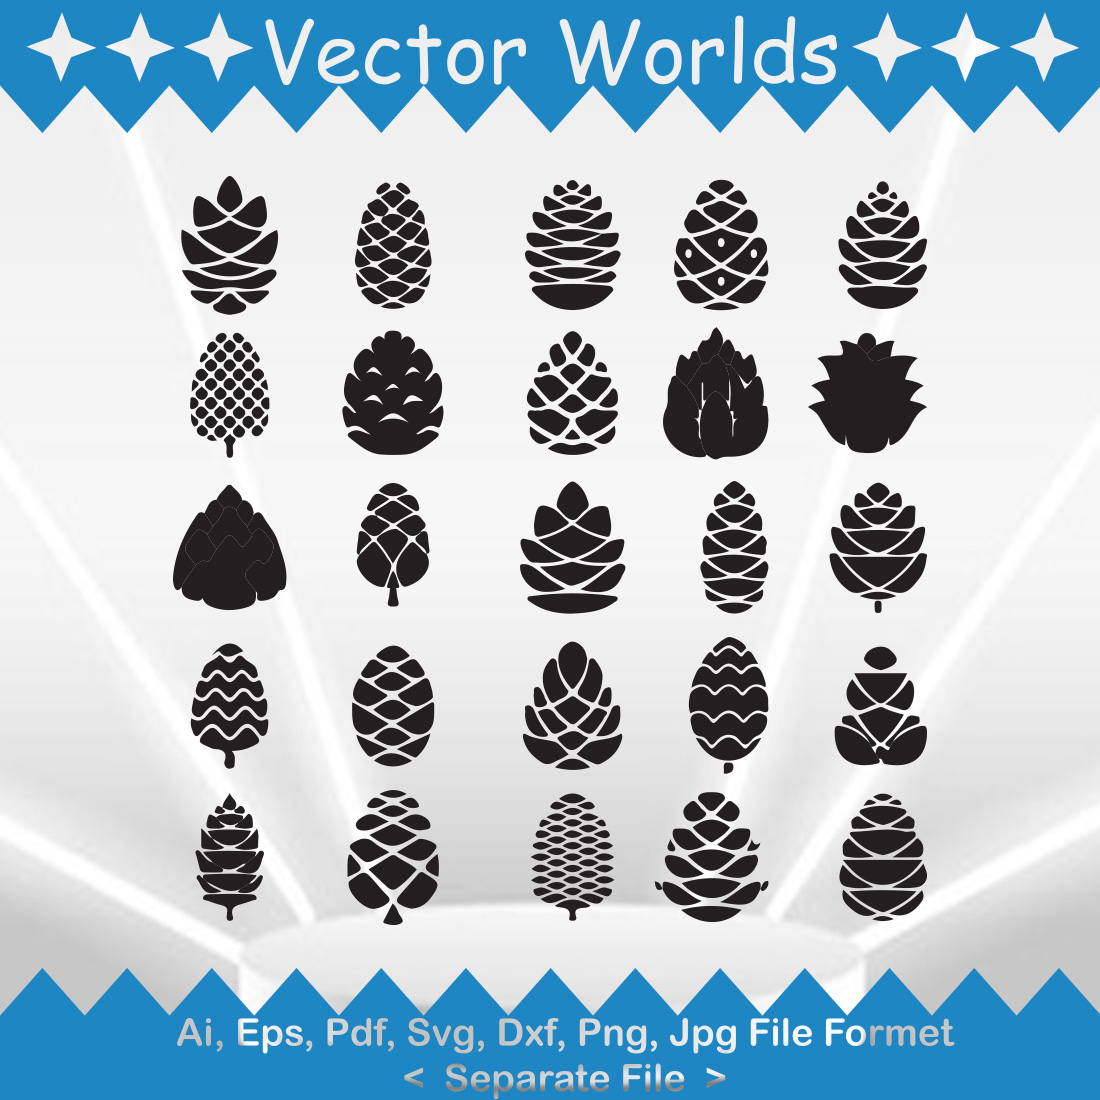 Pine Cones SVG Vector Design cover image.